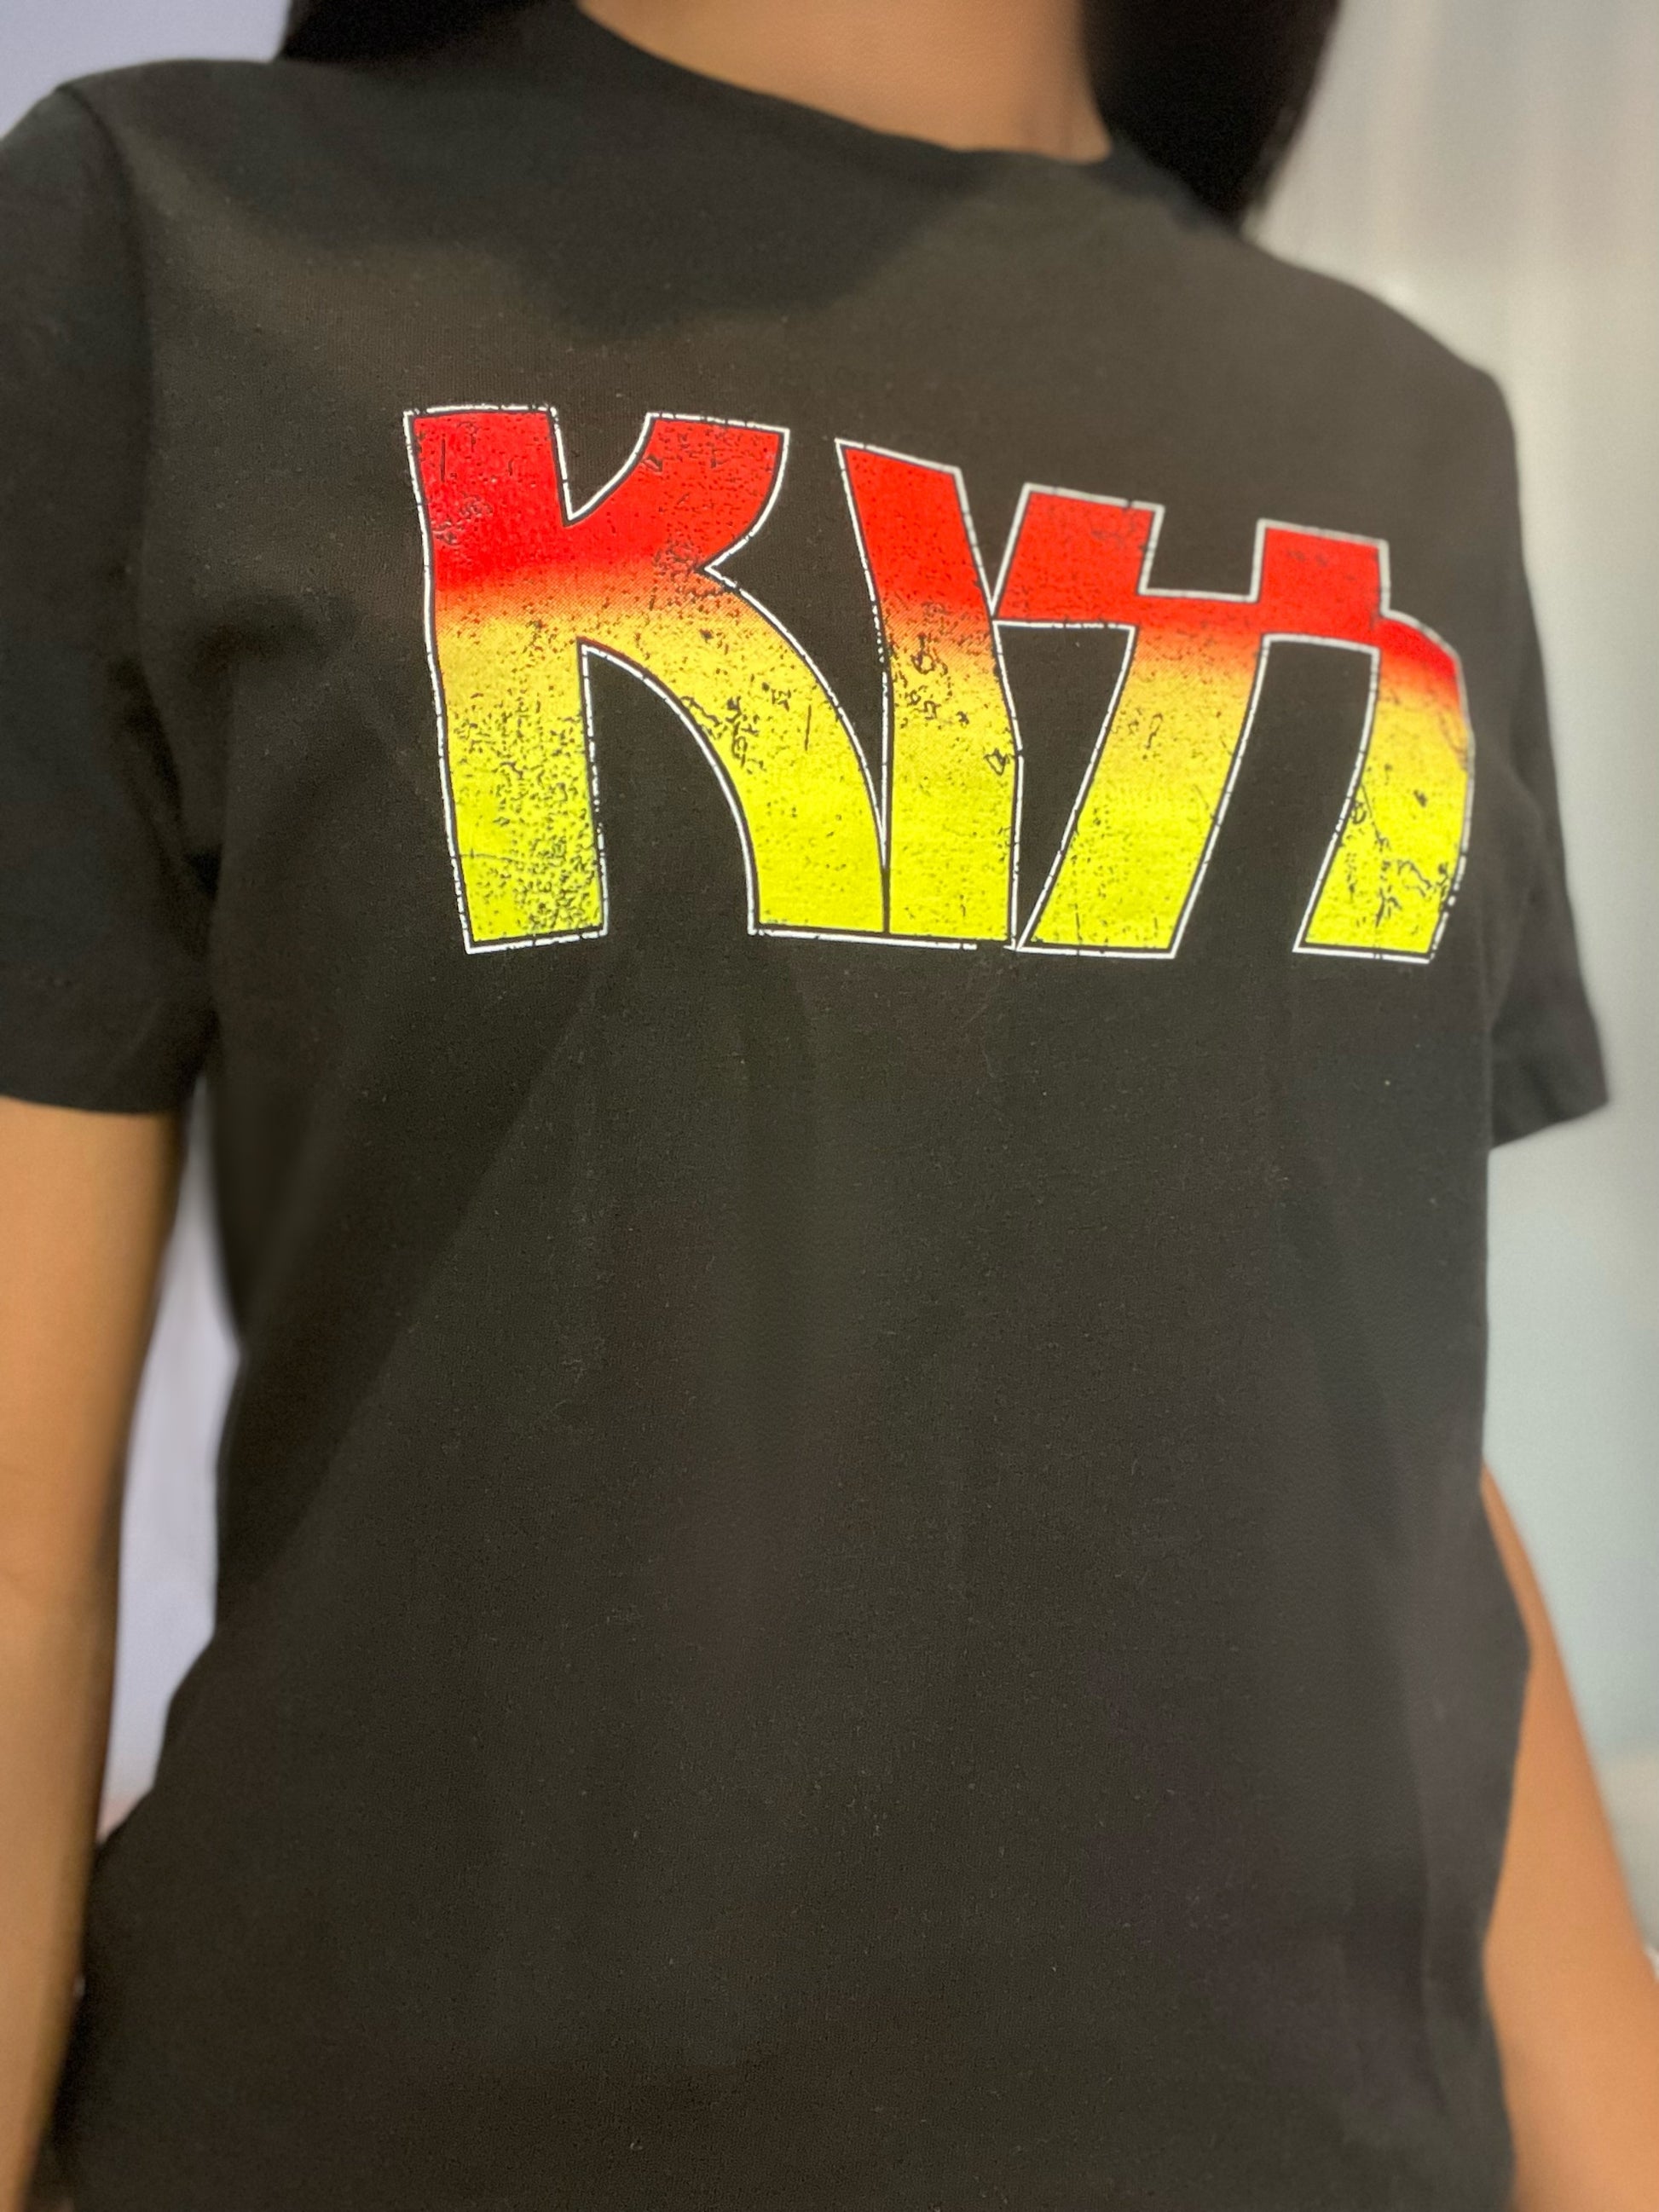 KISS T-shirt